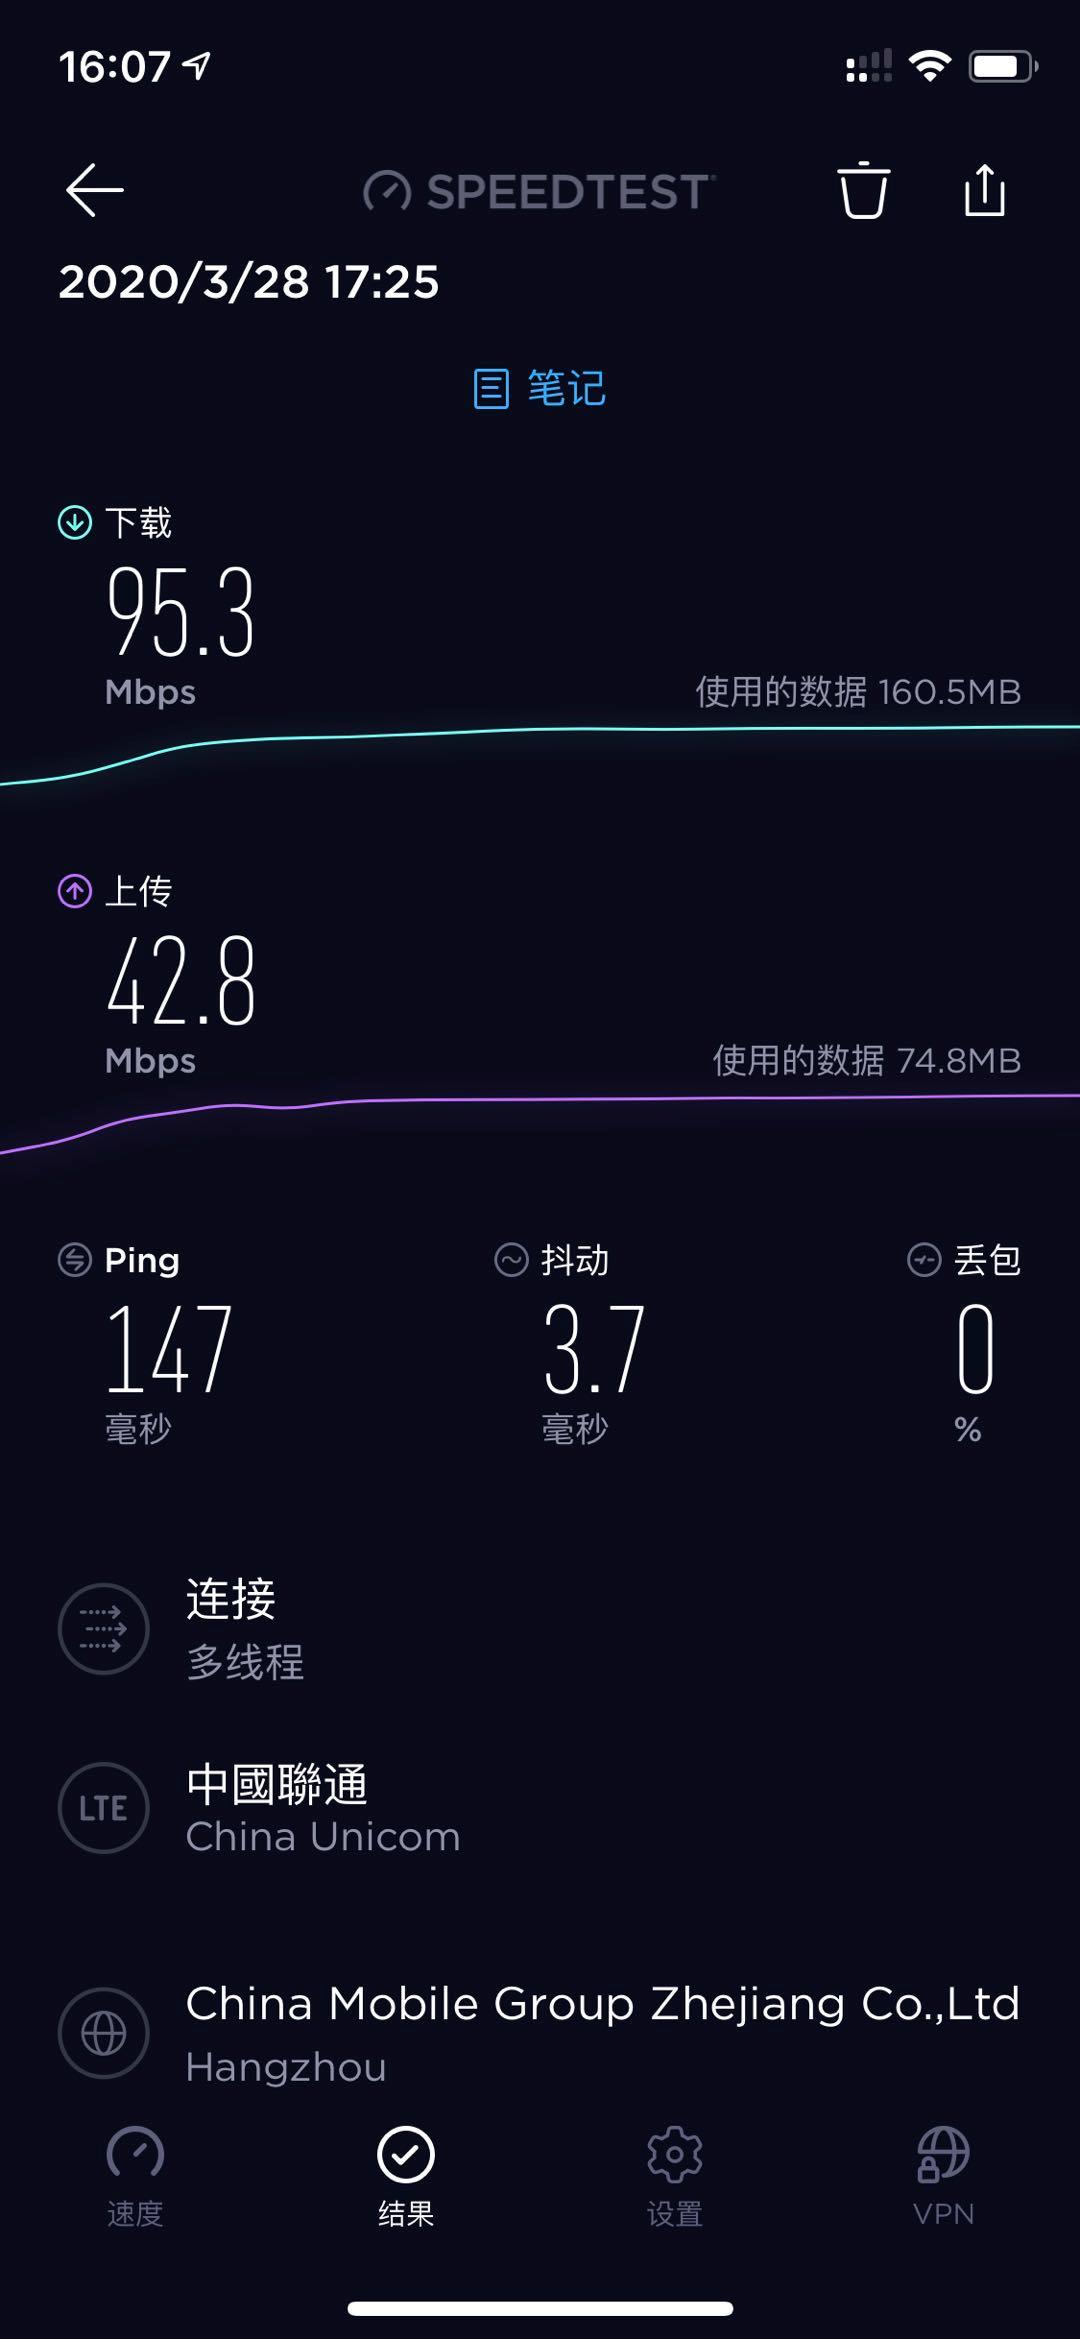 Cuniq_mainland_roaming_speedtest.jpg